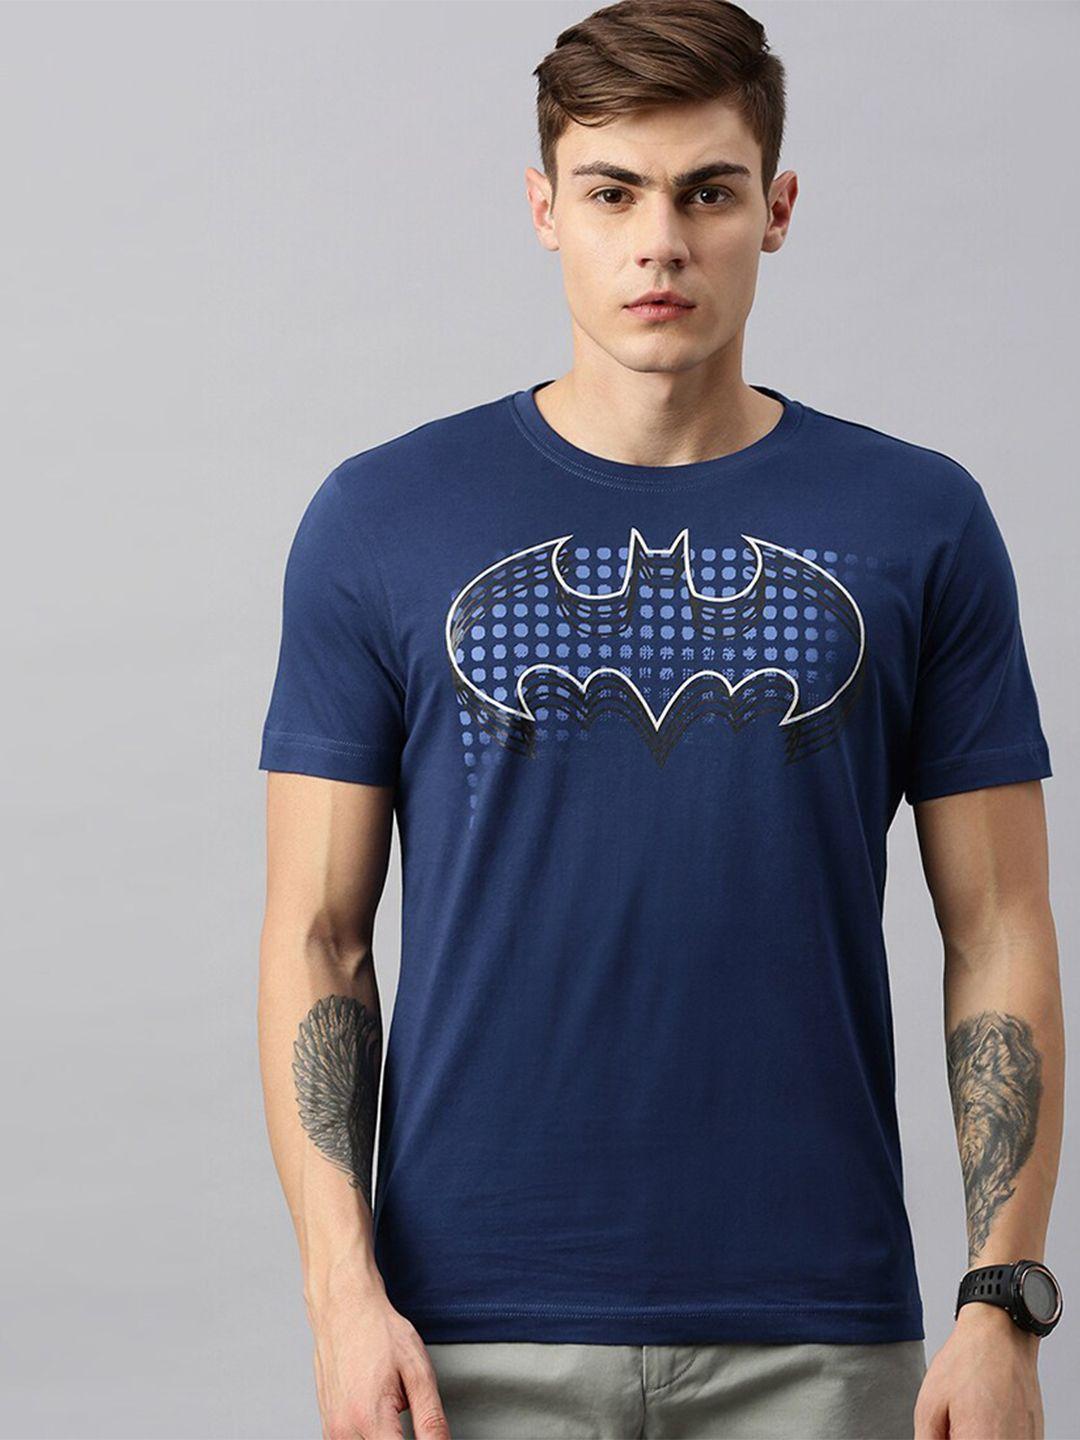 kook n keech batman men navy blue batman printed pure cotton t-shirt